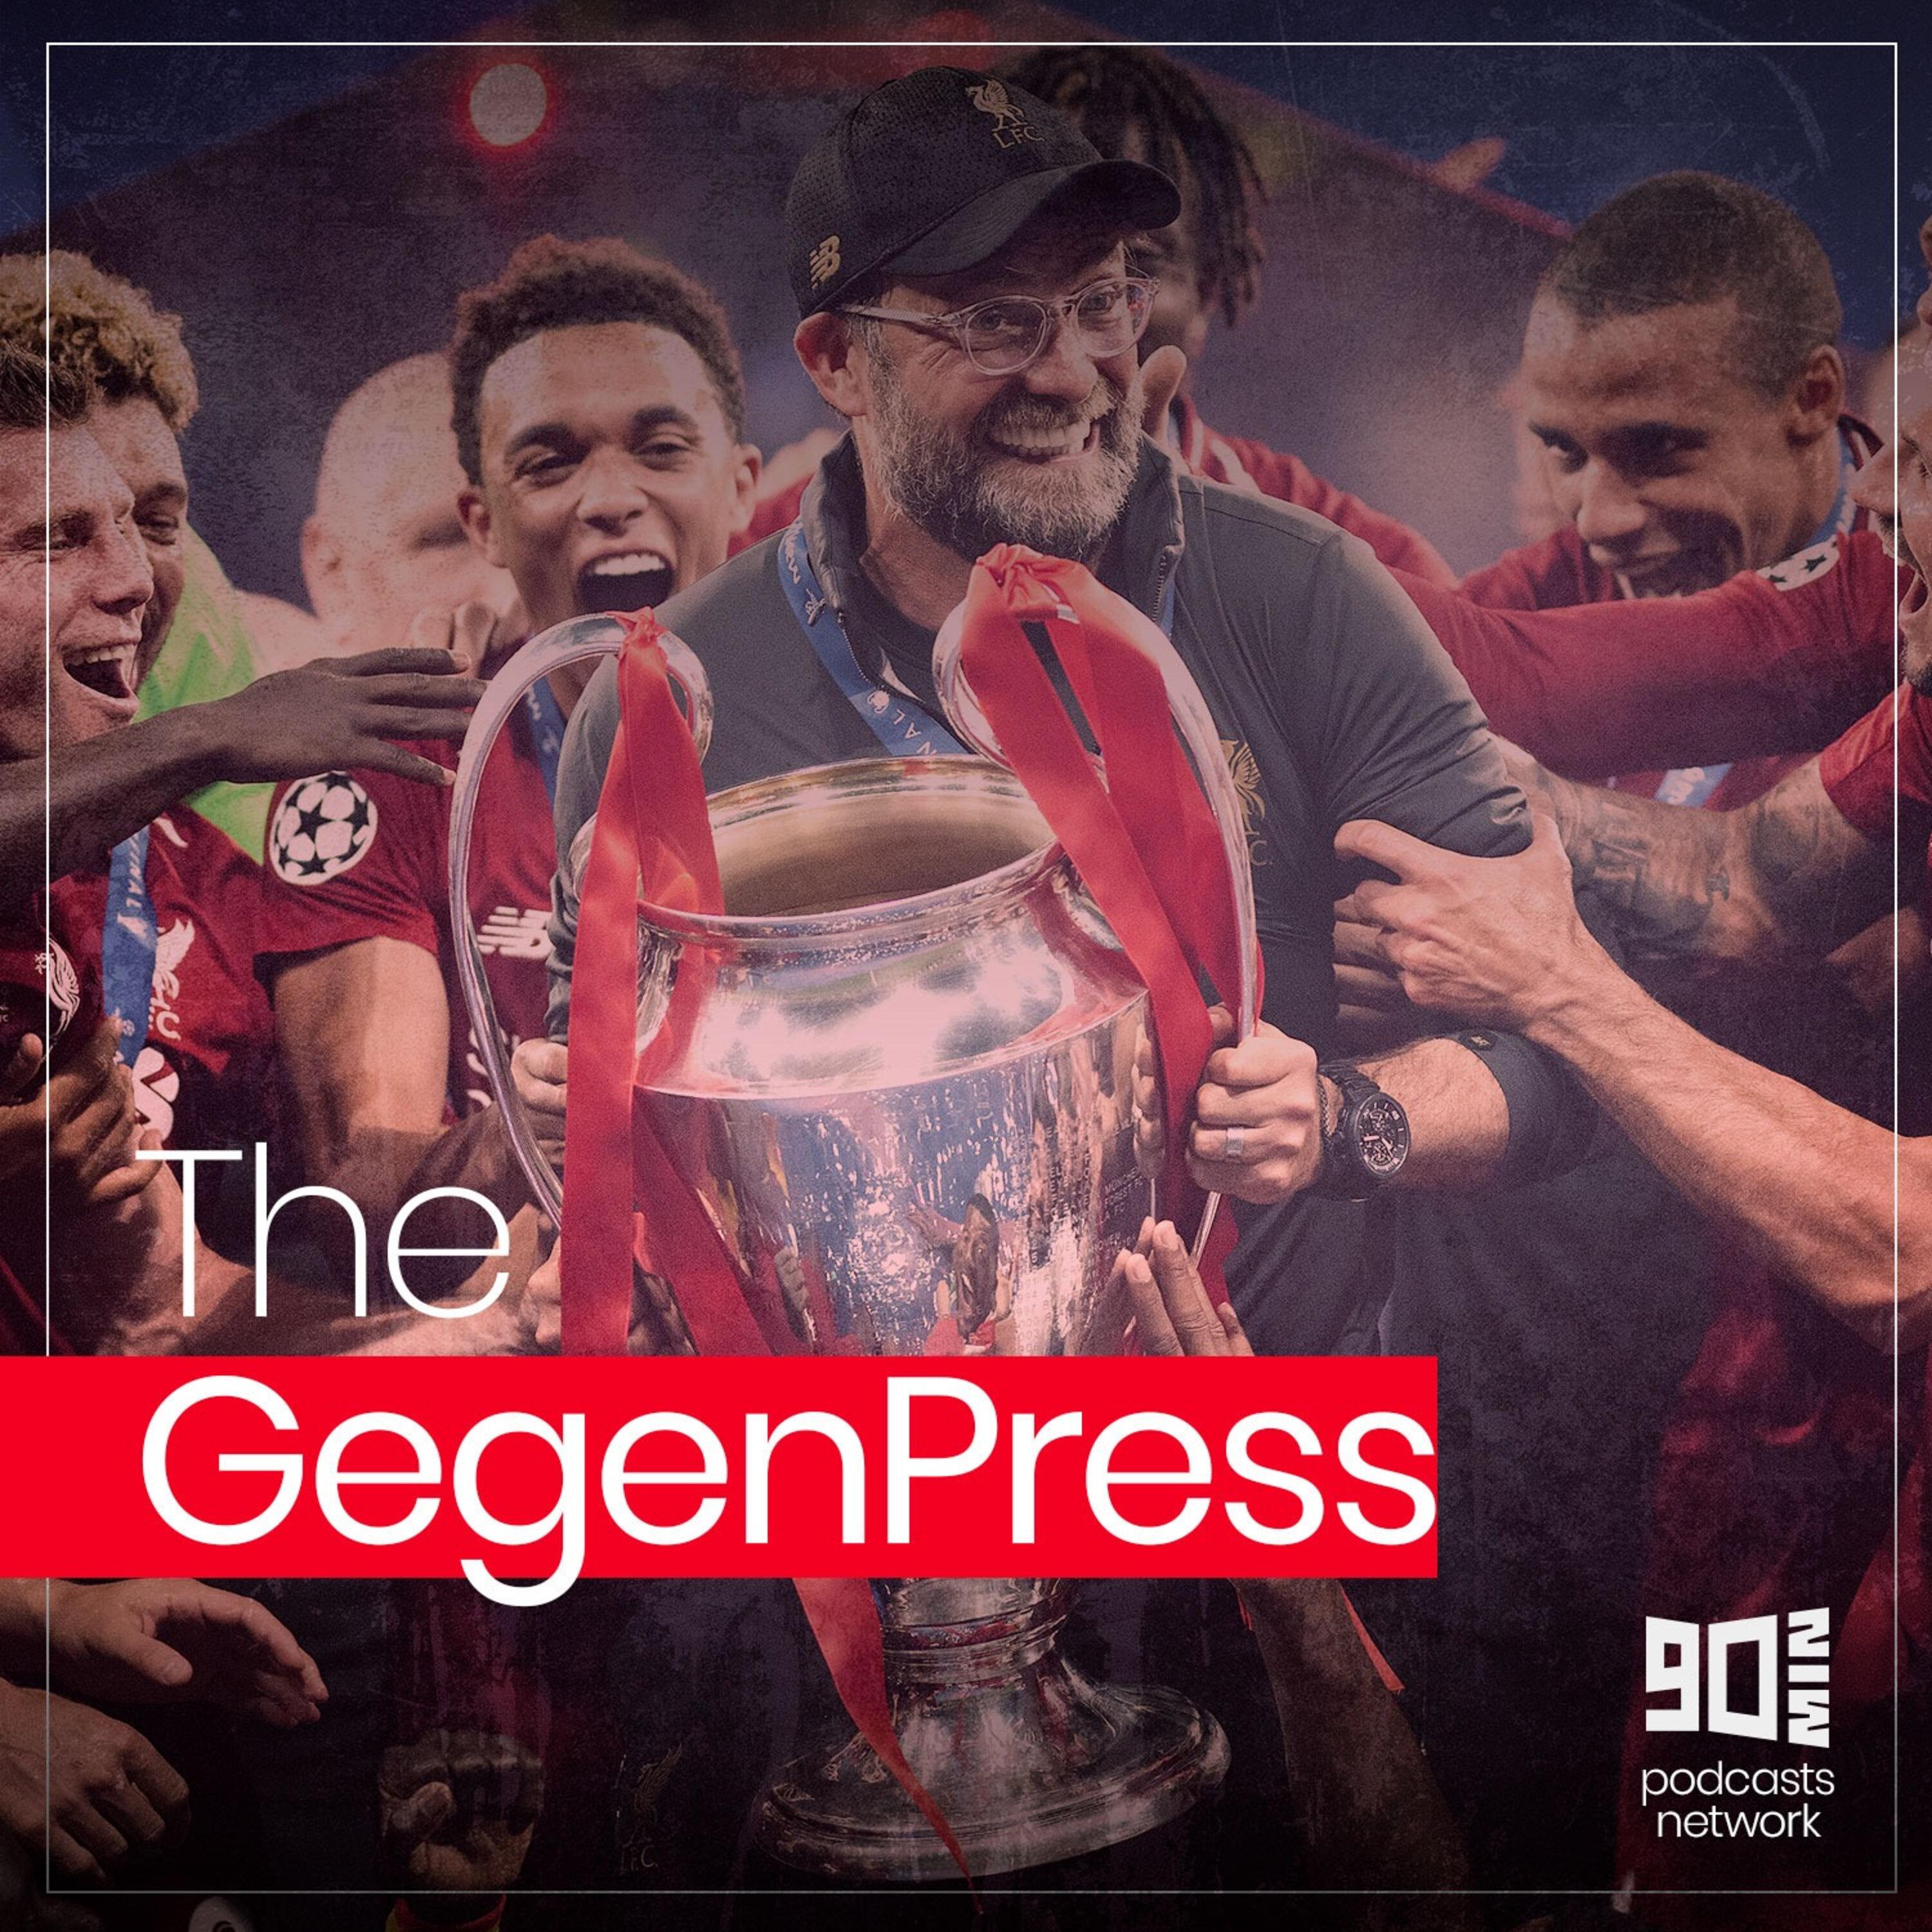 The GegenPress - A Liverpool FC podcast